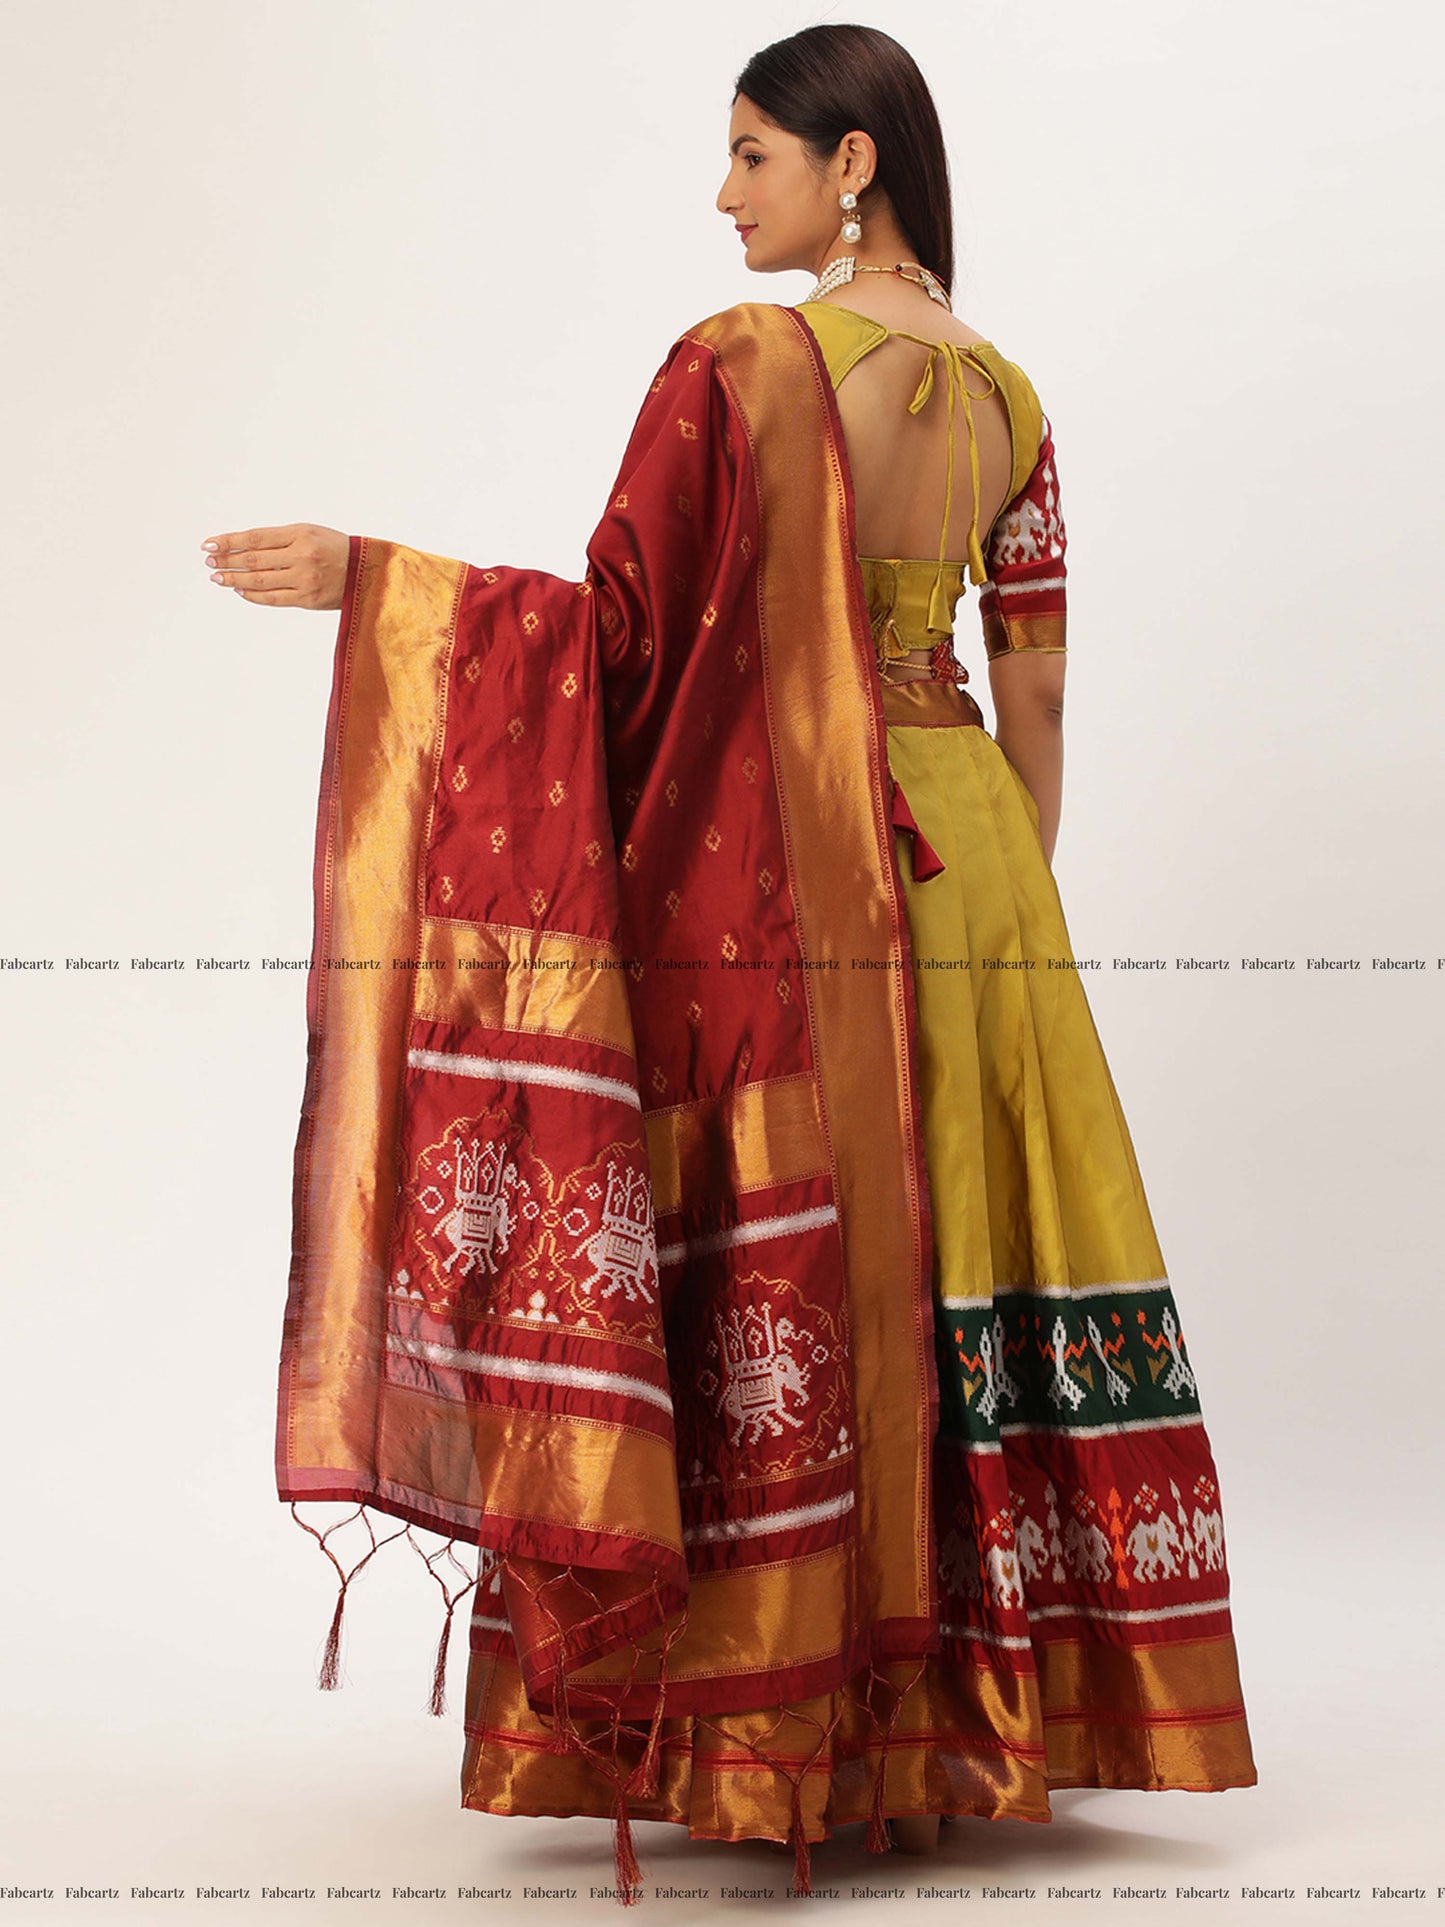 🌟 Enchanting South Indian Wedding Traditional Half Saree : Embrace the Splendor! 💍💃